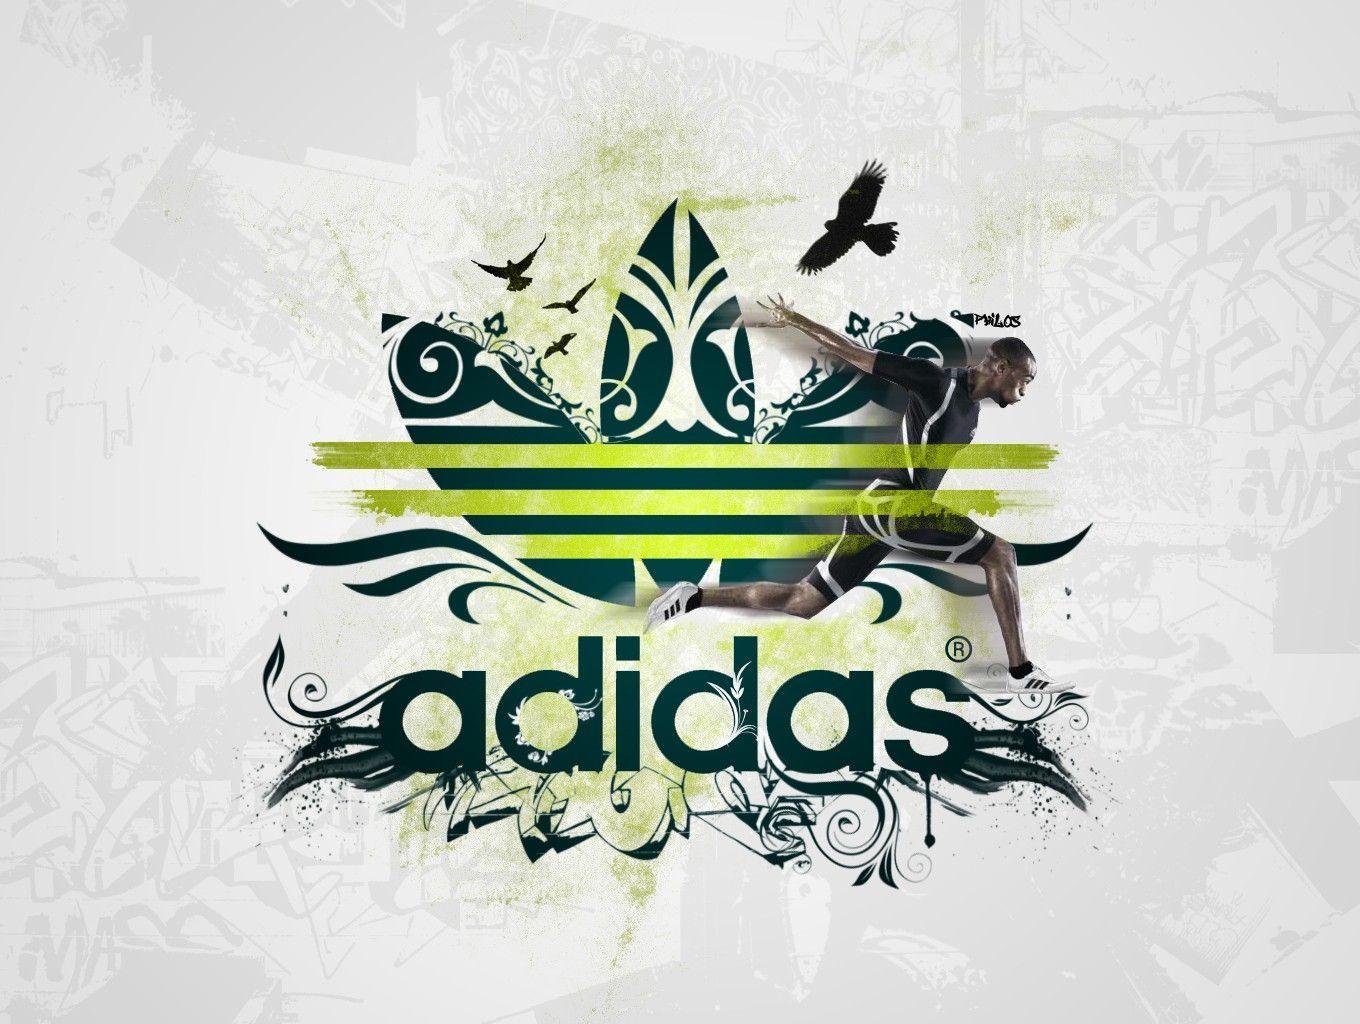 Logo Adidas Wallpapers - Wallpaper Cave